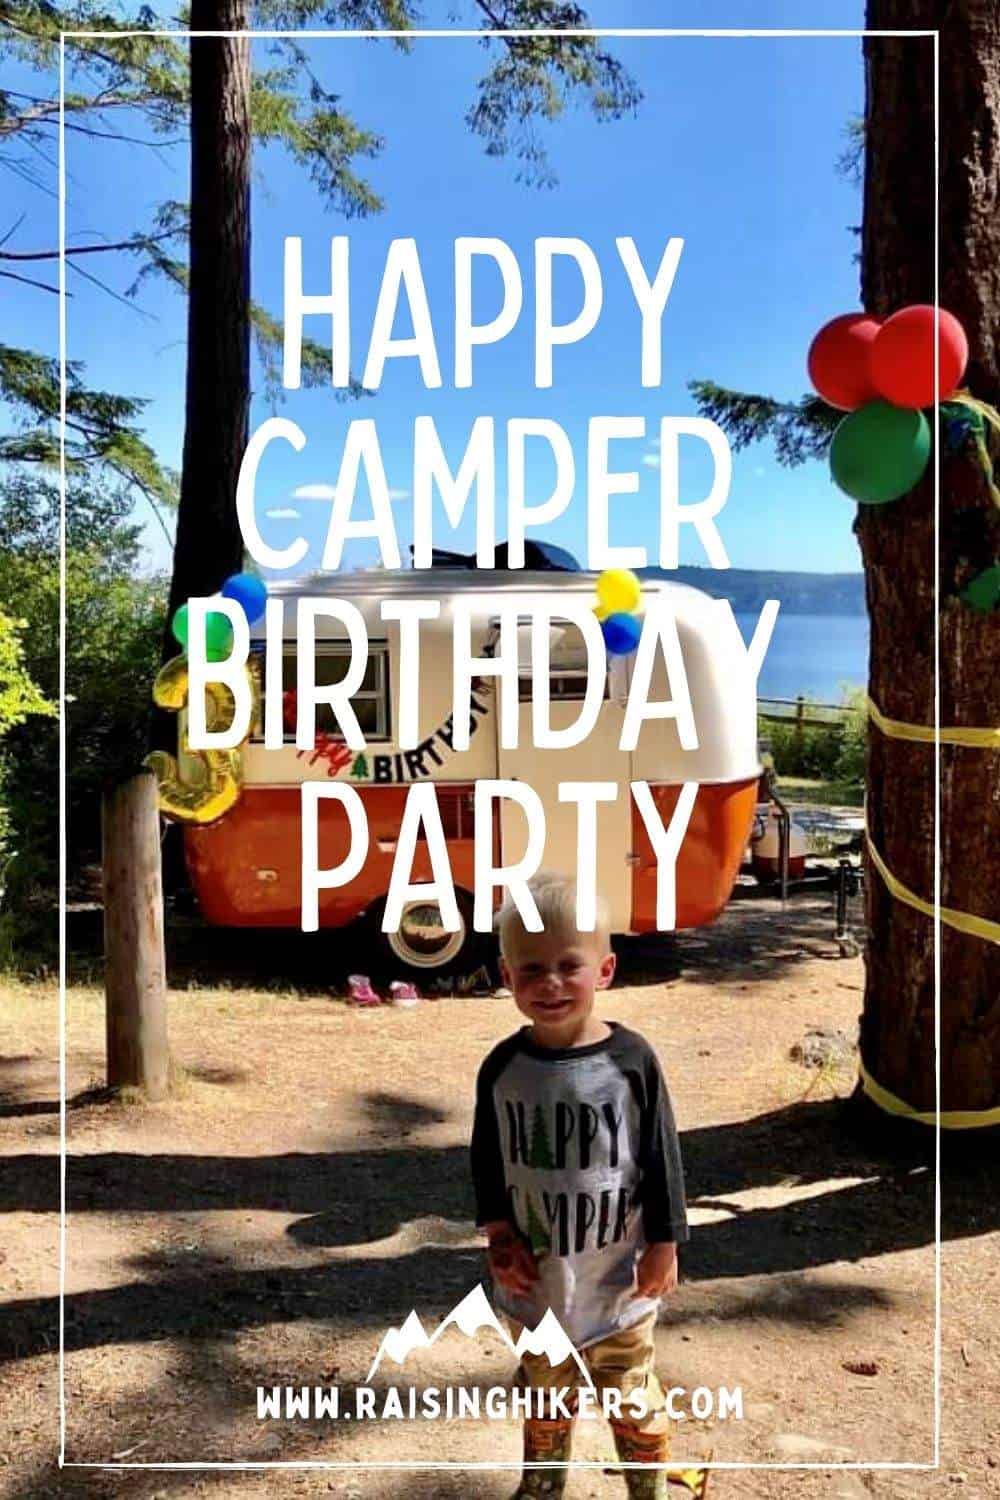 Happy Camper Birthday Party